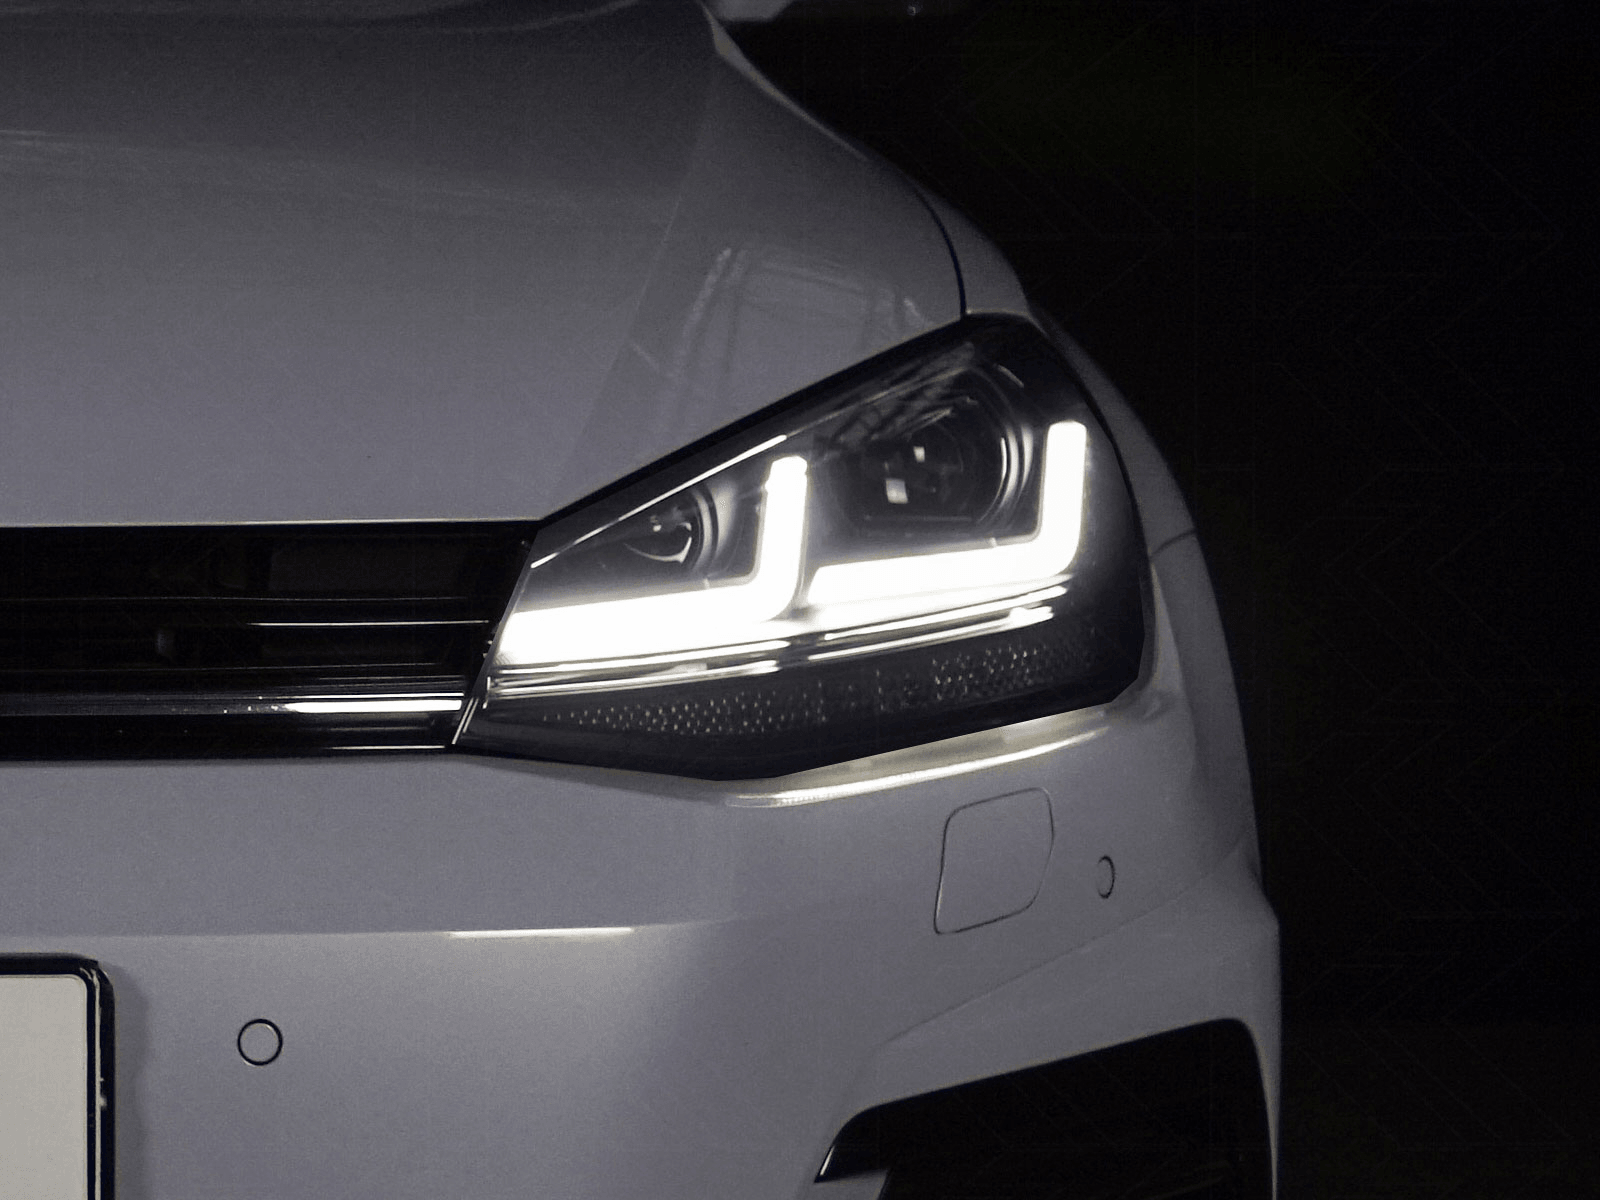 2017 VW Golf 7 Facelift - LED-Scheinwerfer - dynamischer Blinker - ALS [4K]  